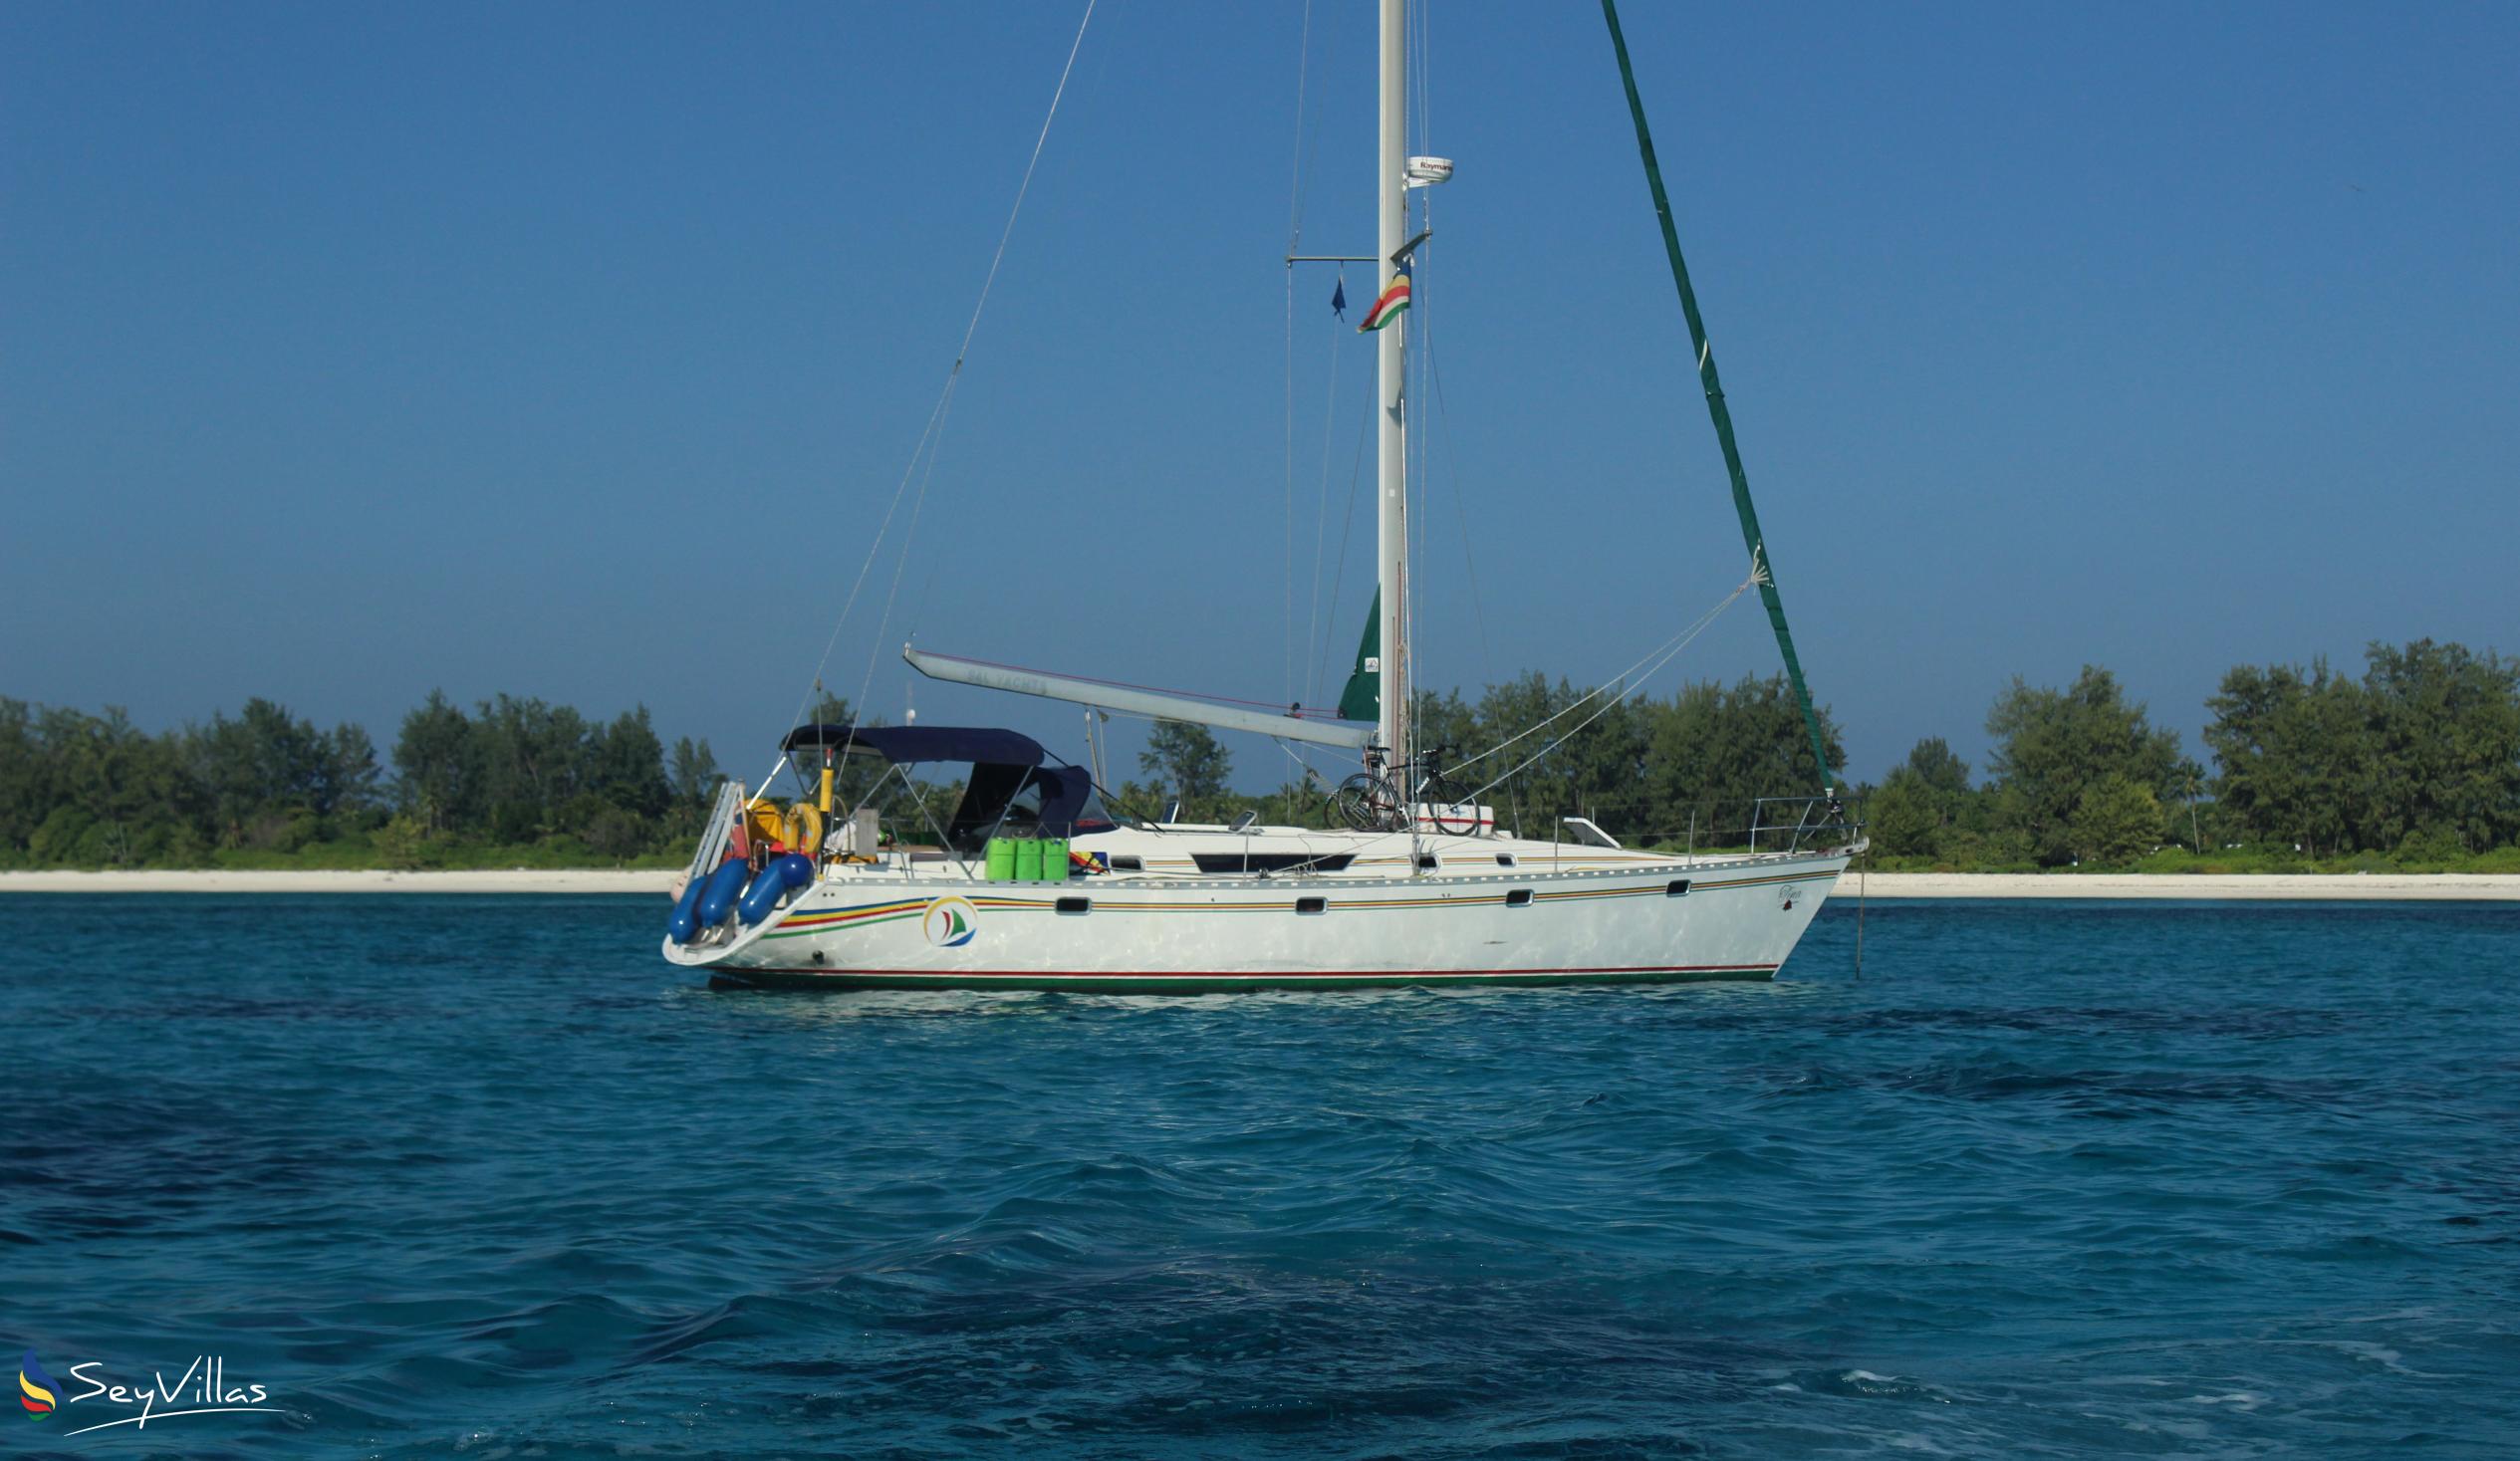 Foto 3: Seyscapes Yacht Charter - Aussenbereich - Seychellen (Seychellen)